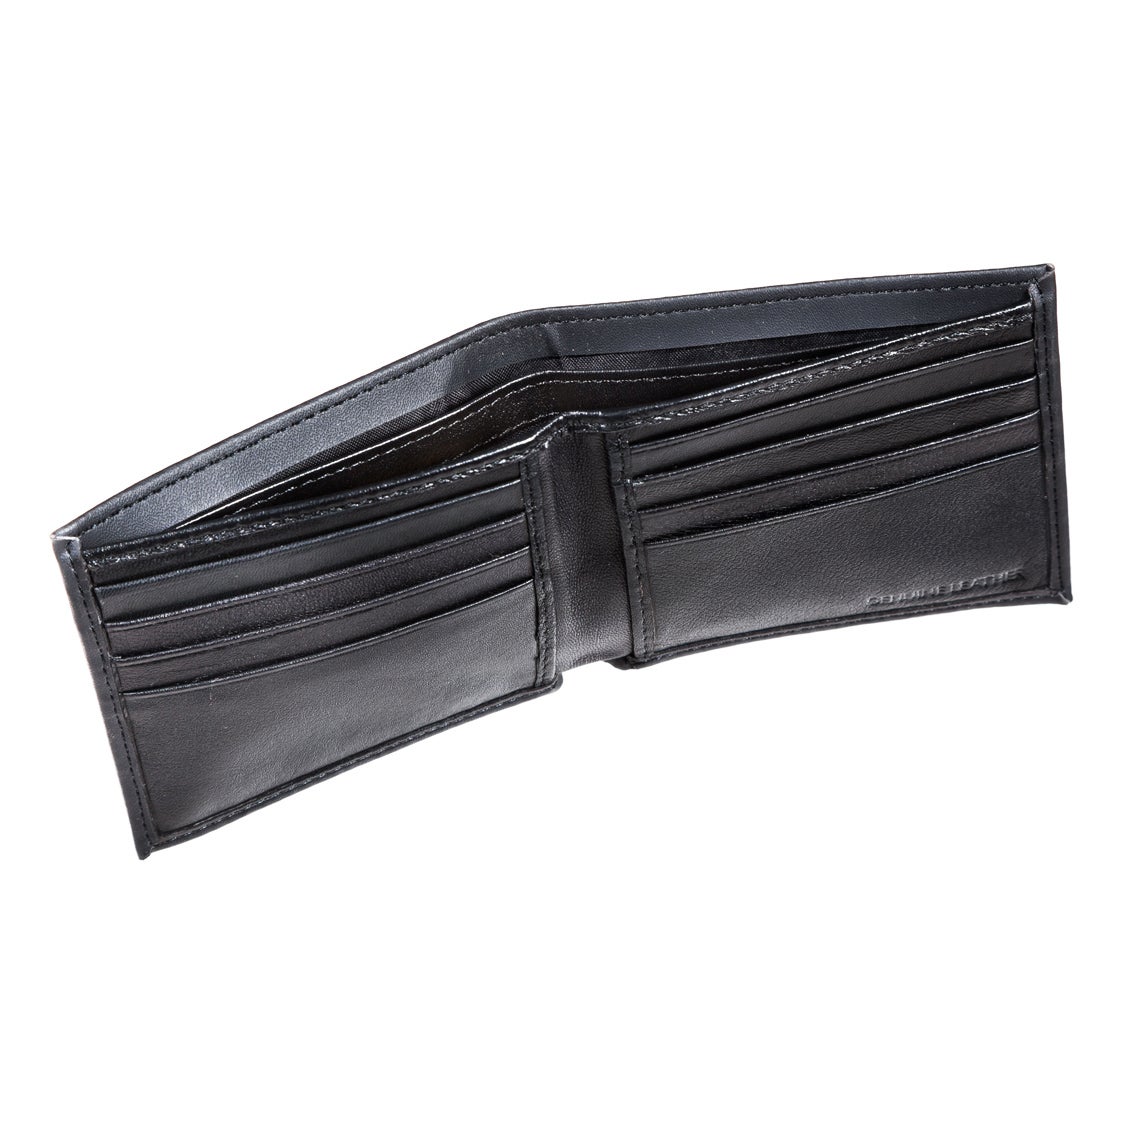 Vancouver Canucks Bi-Fold Leather Wallet